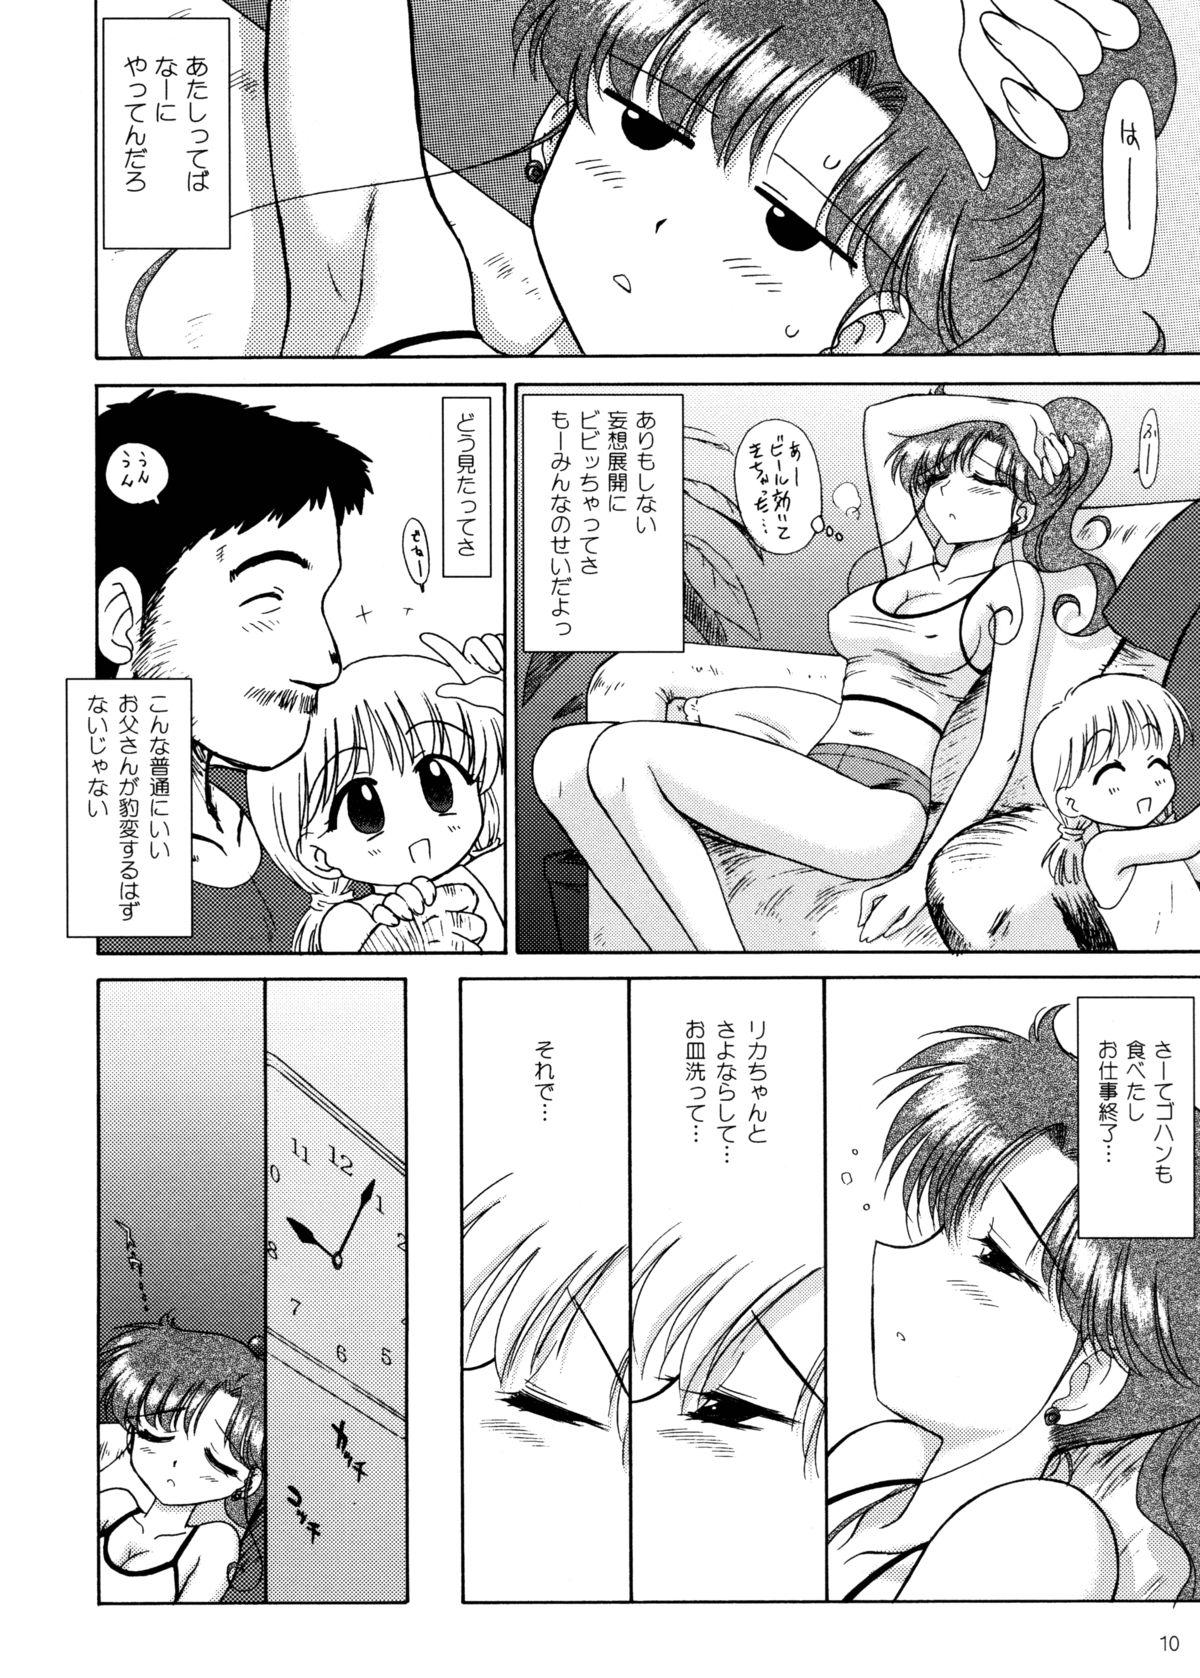 Teen Sex In a Silent Way - Sailor moon Moreno - Page 9